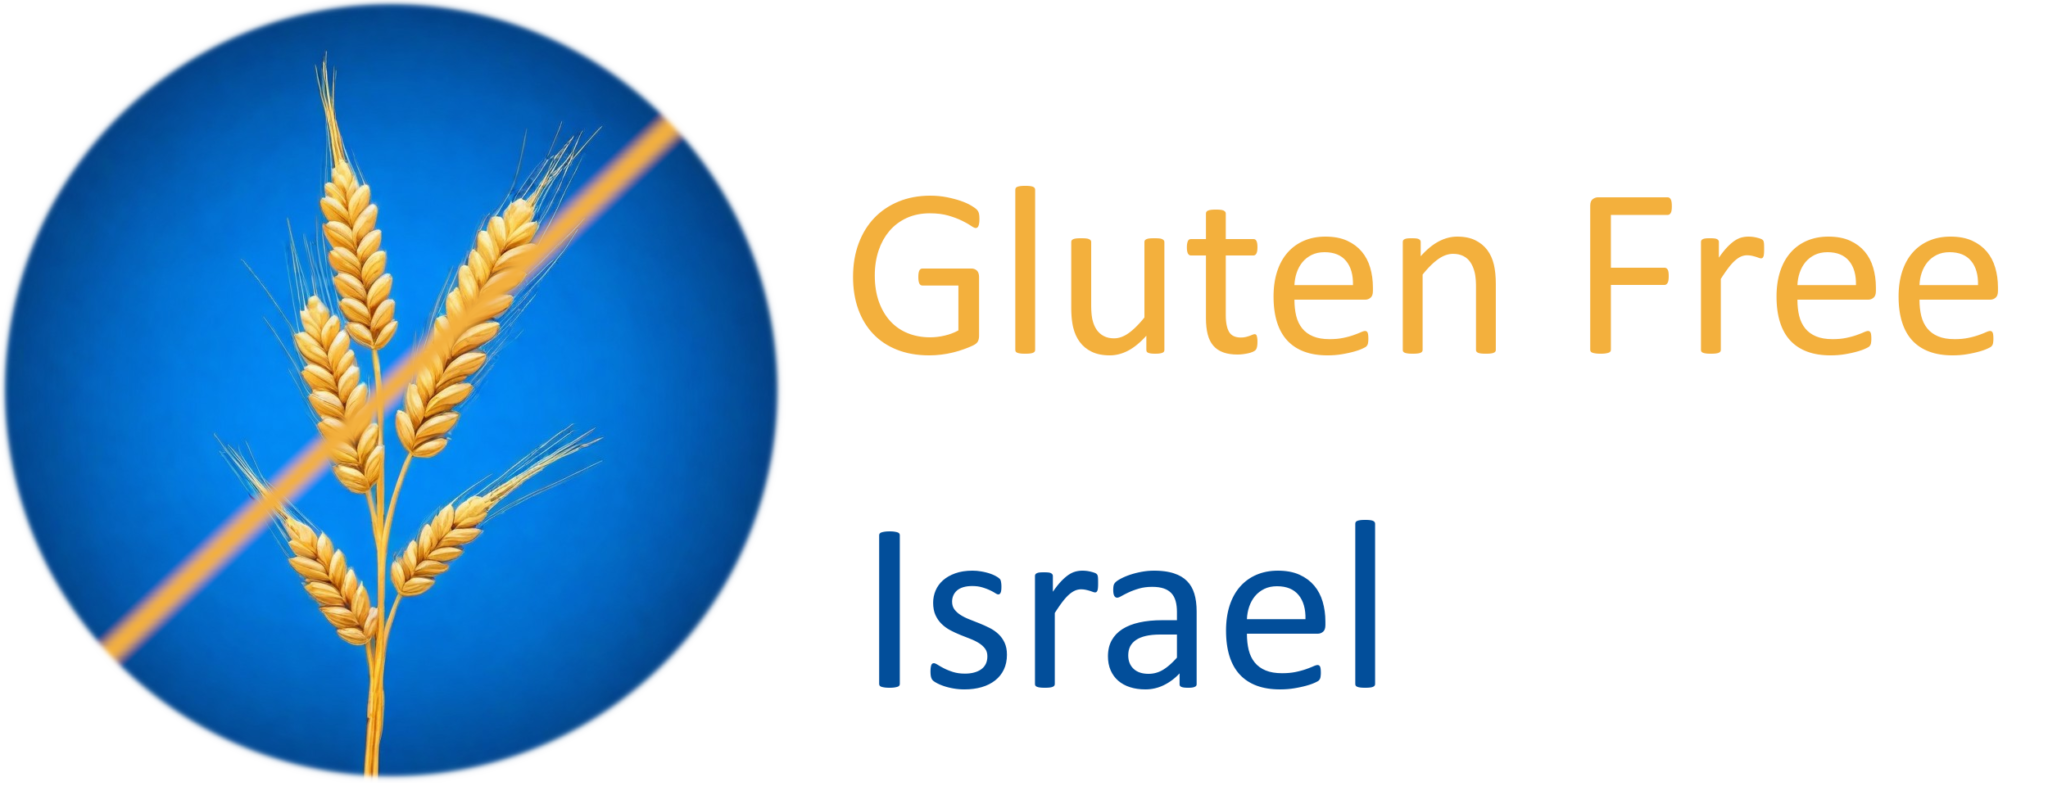 Gluten Free Israel logo